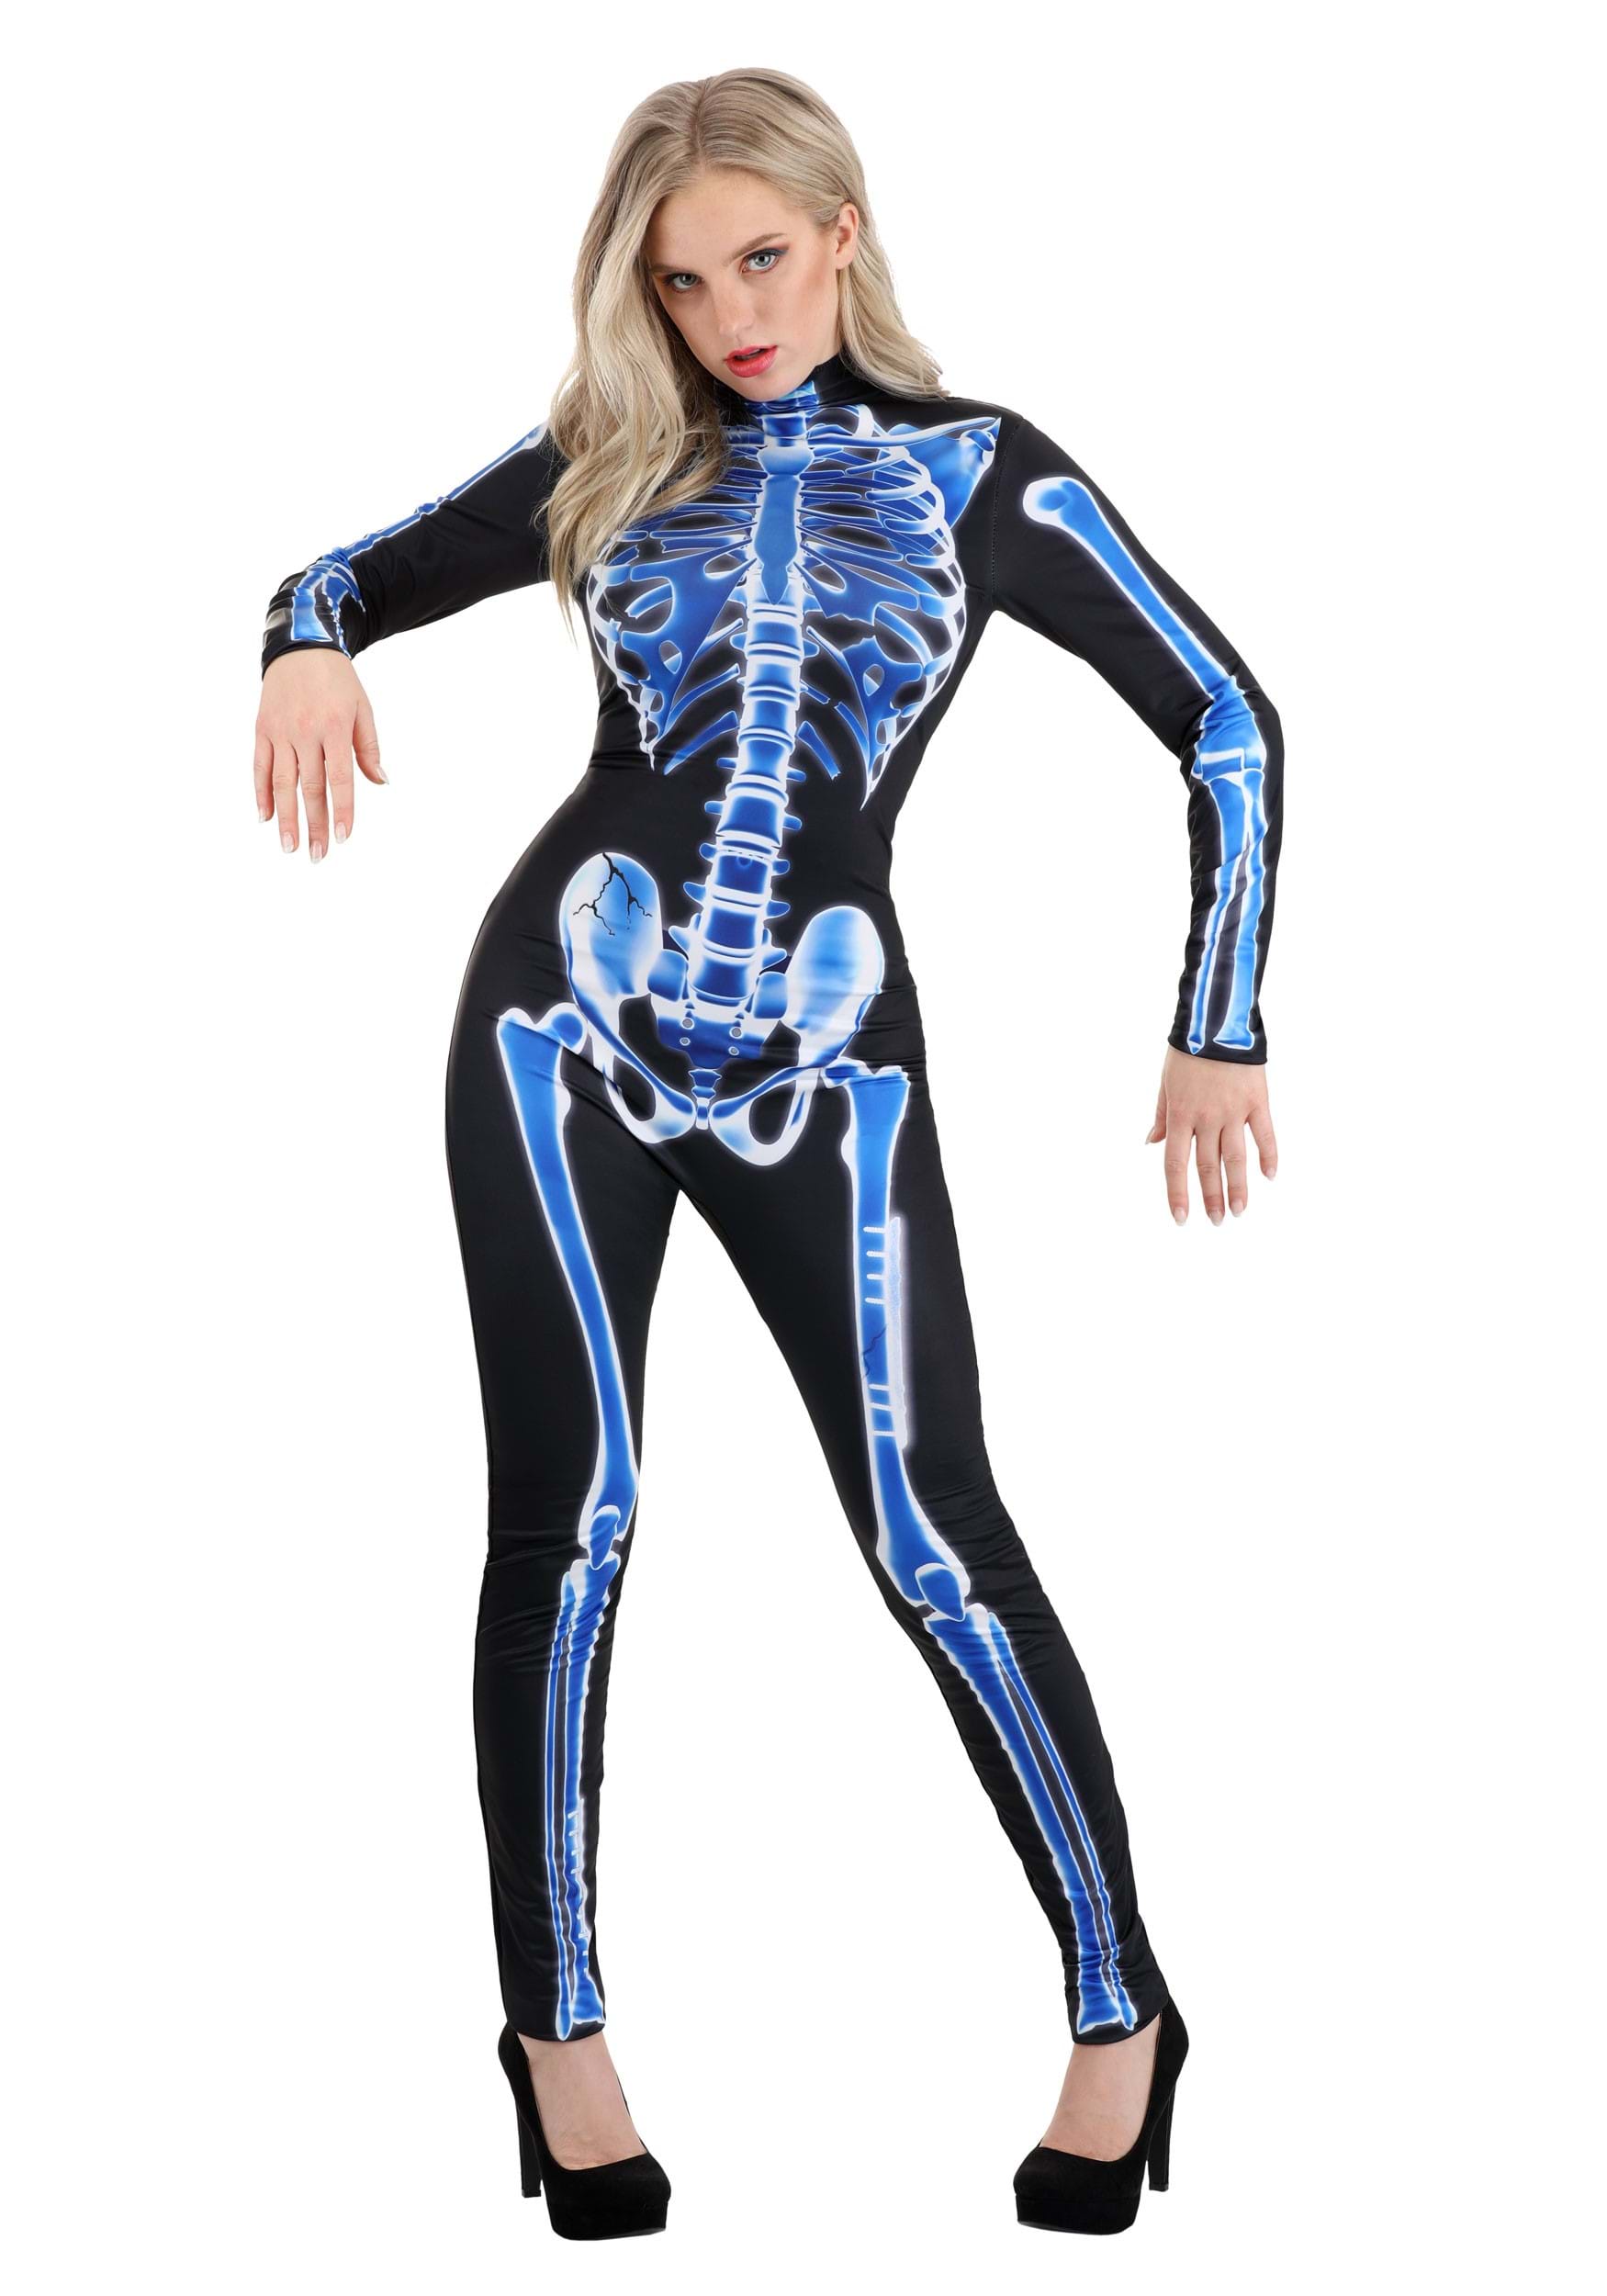 Photos - Fancy Dress X-Ray FUN Costumes  Skeleton Jumpsuit Costume for Women Black/Blue FUN1 